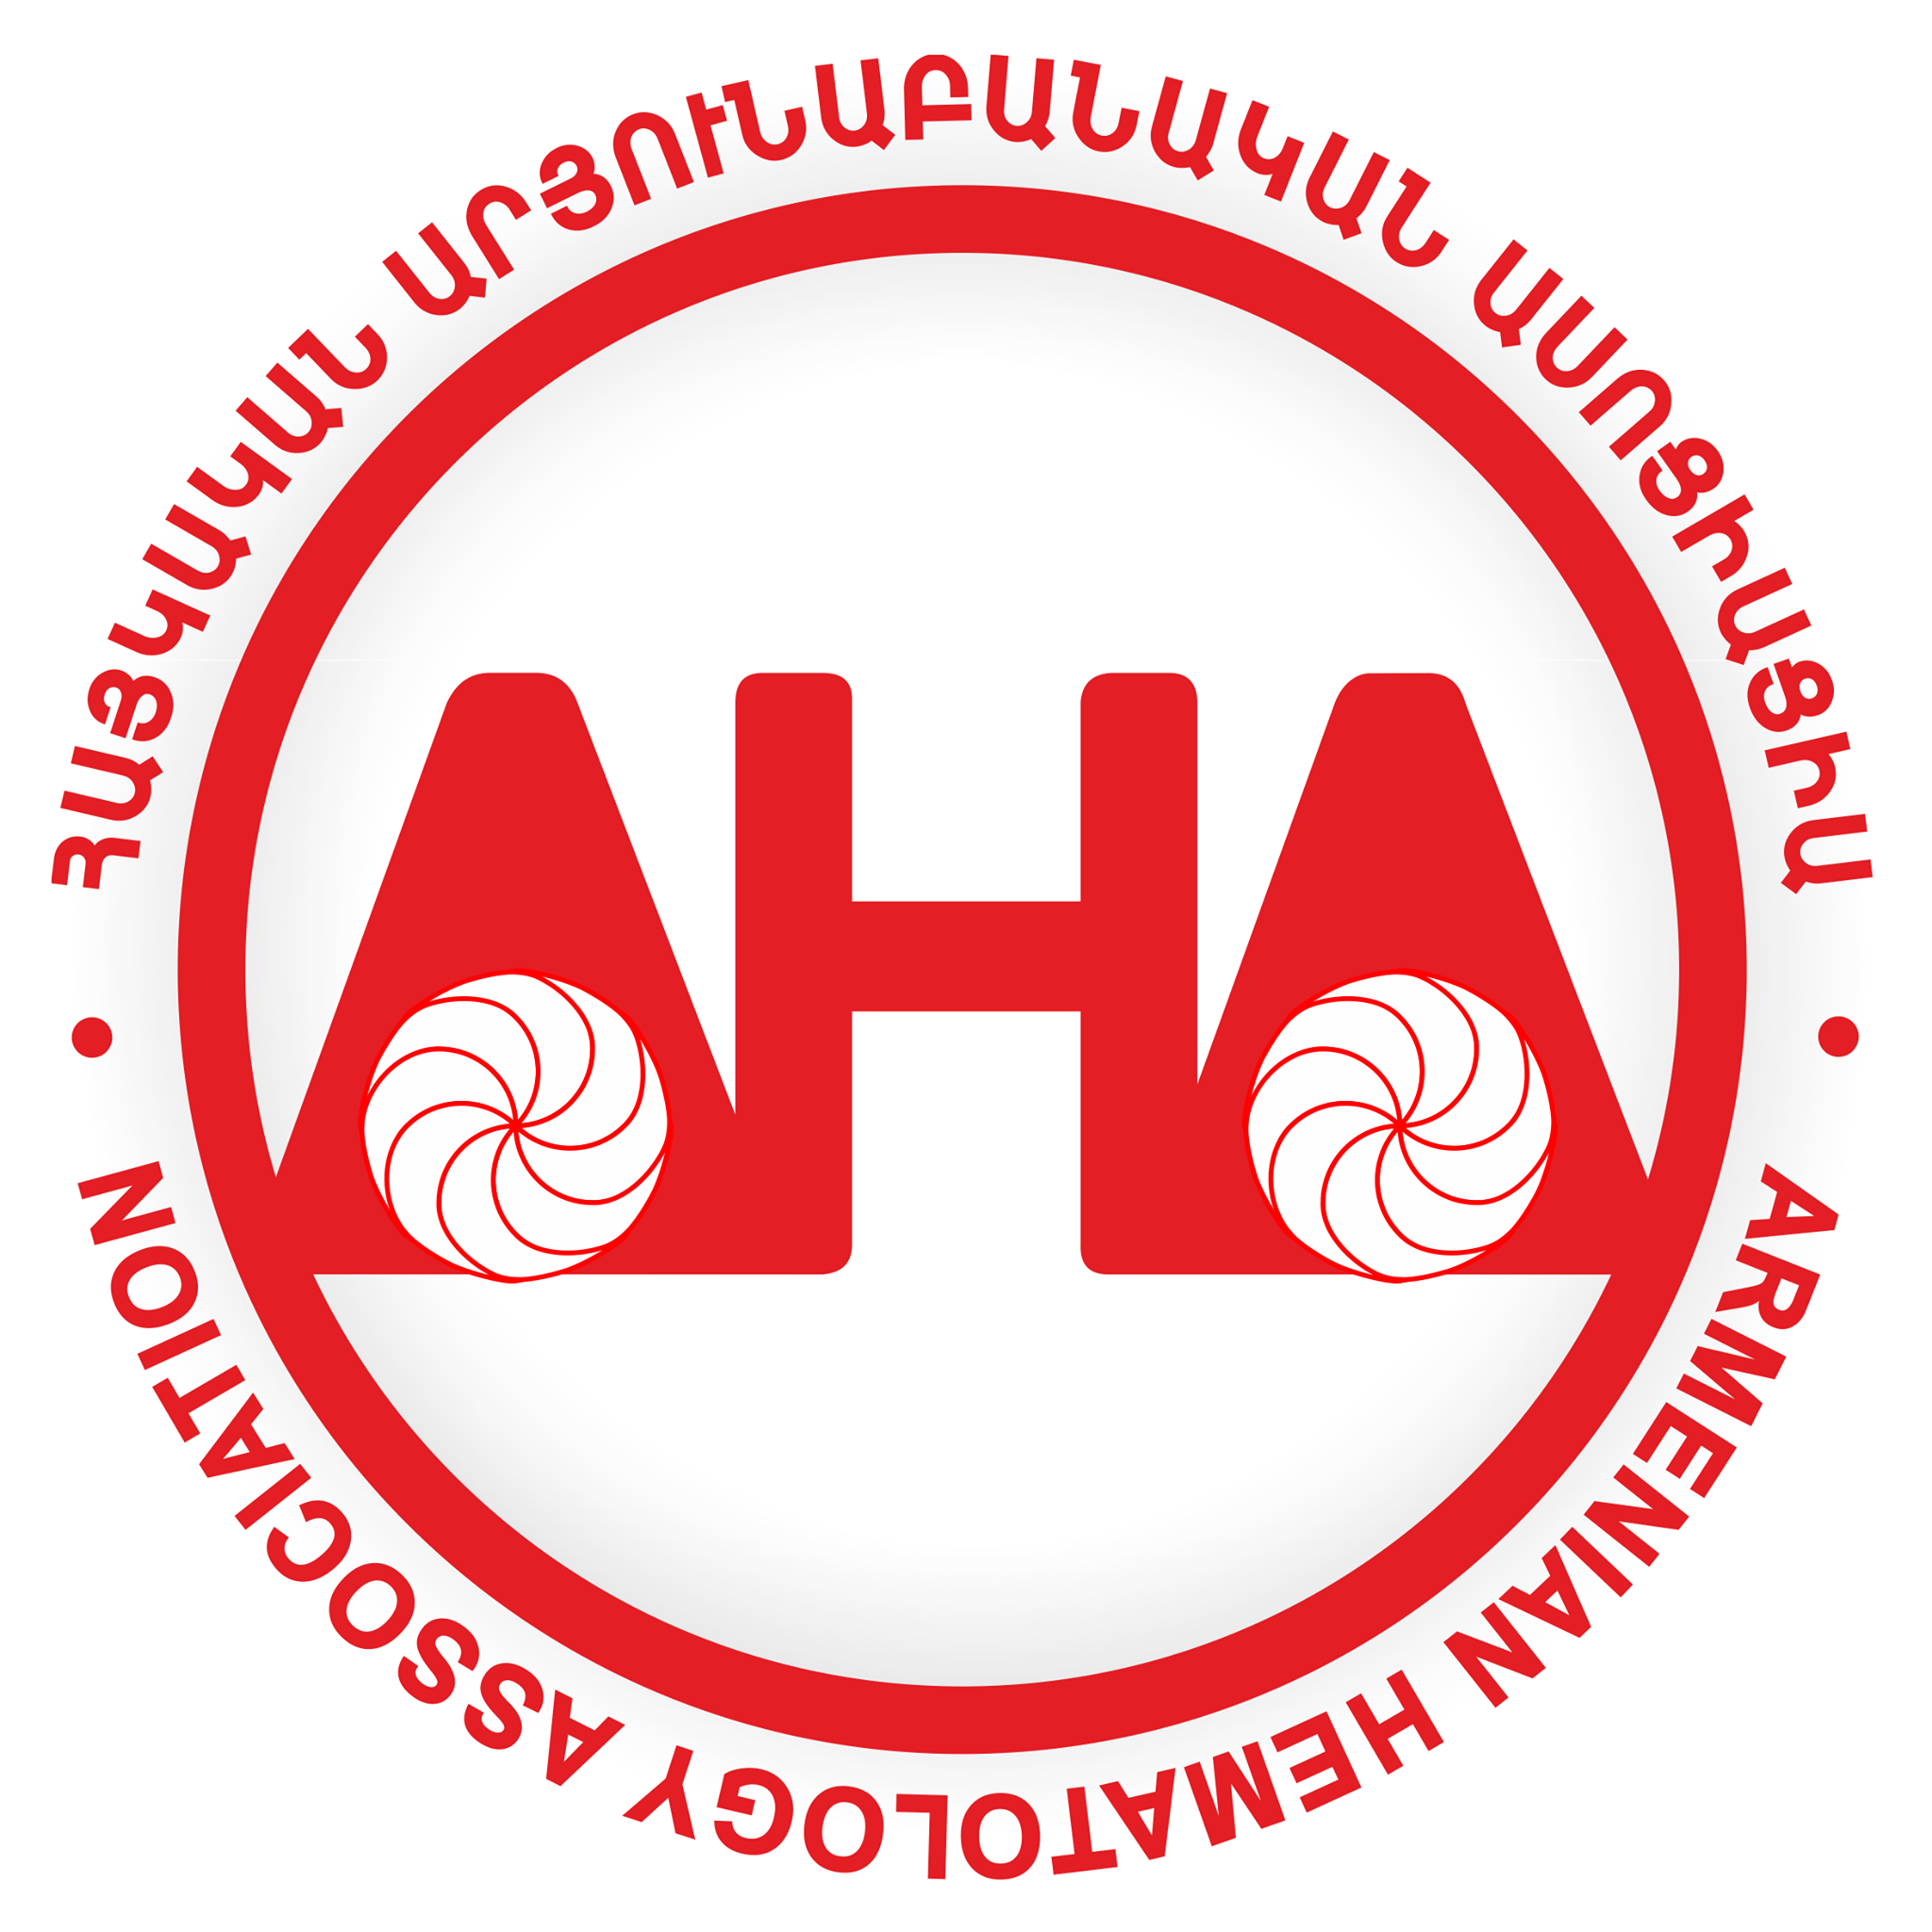 Armenian Hematology Association